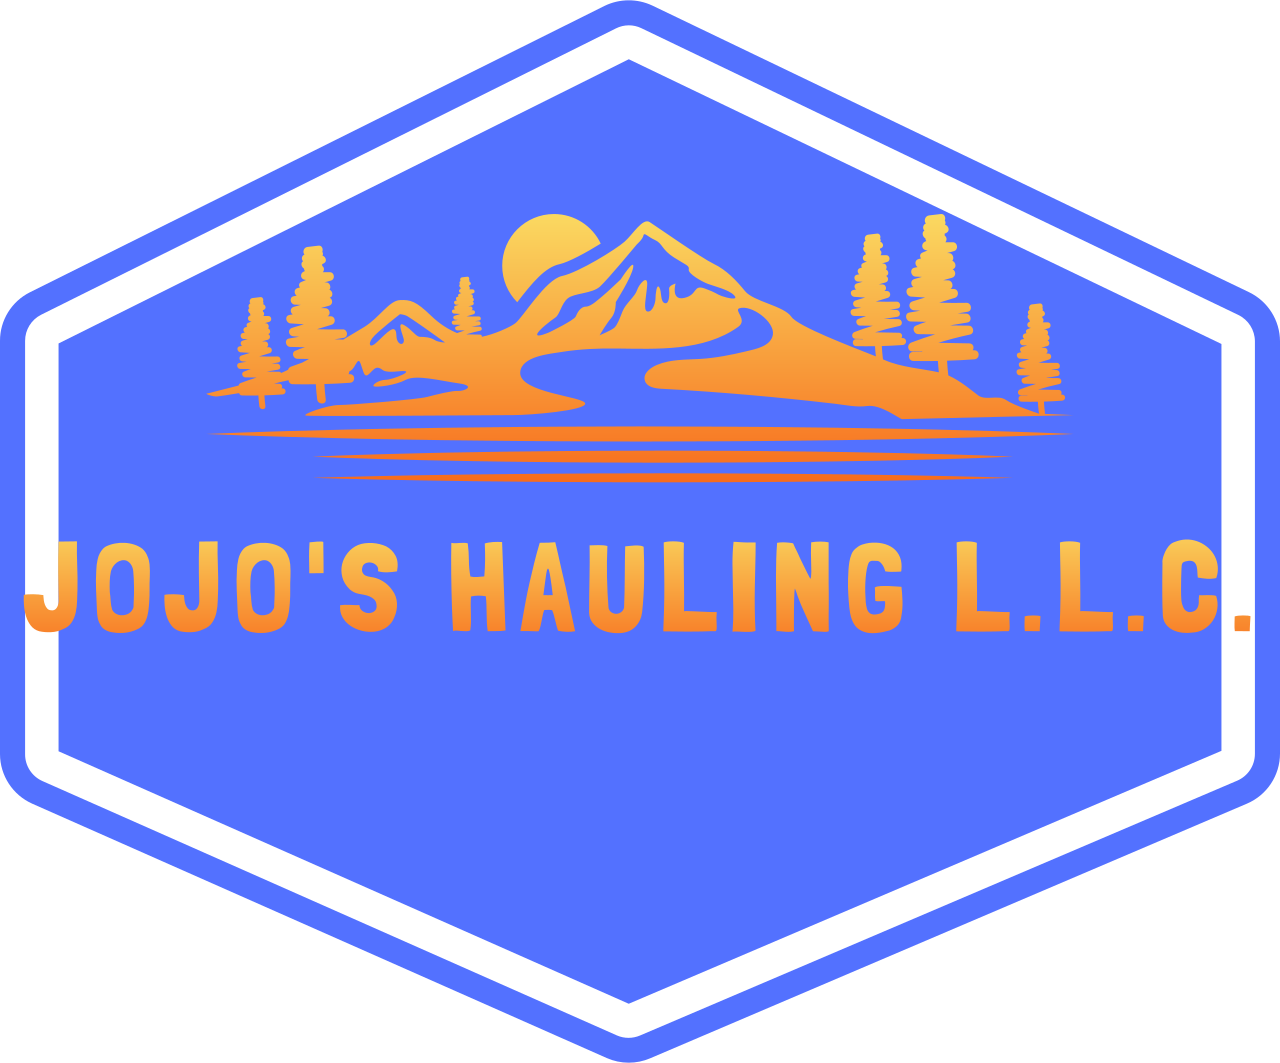 JoJo's Hauling L.L.C.'s logo